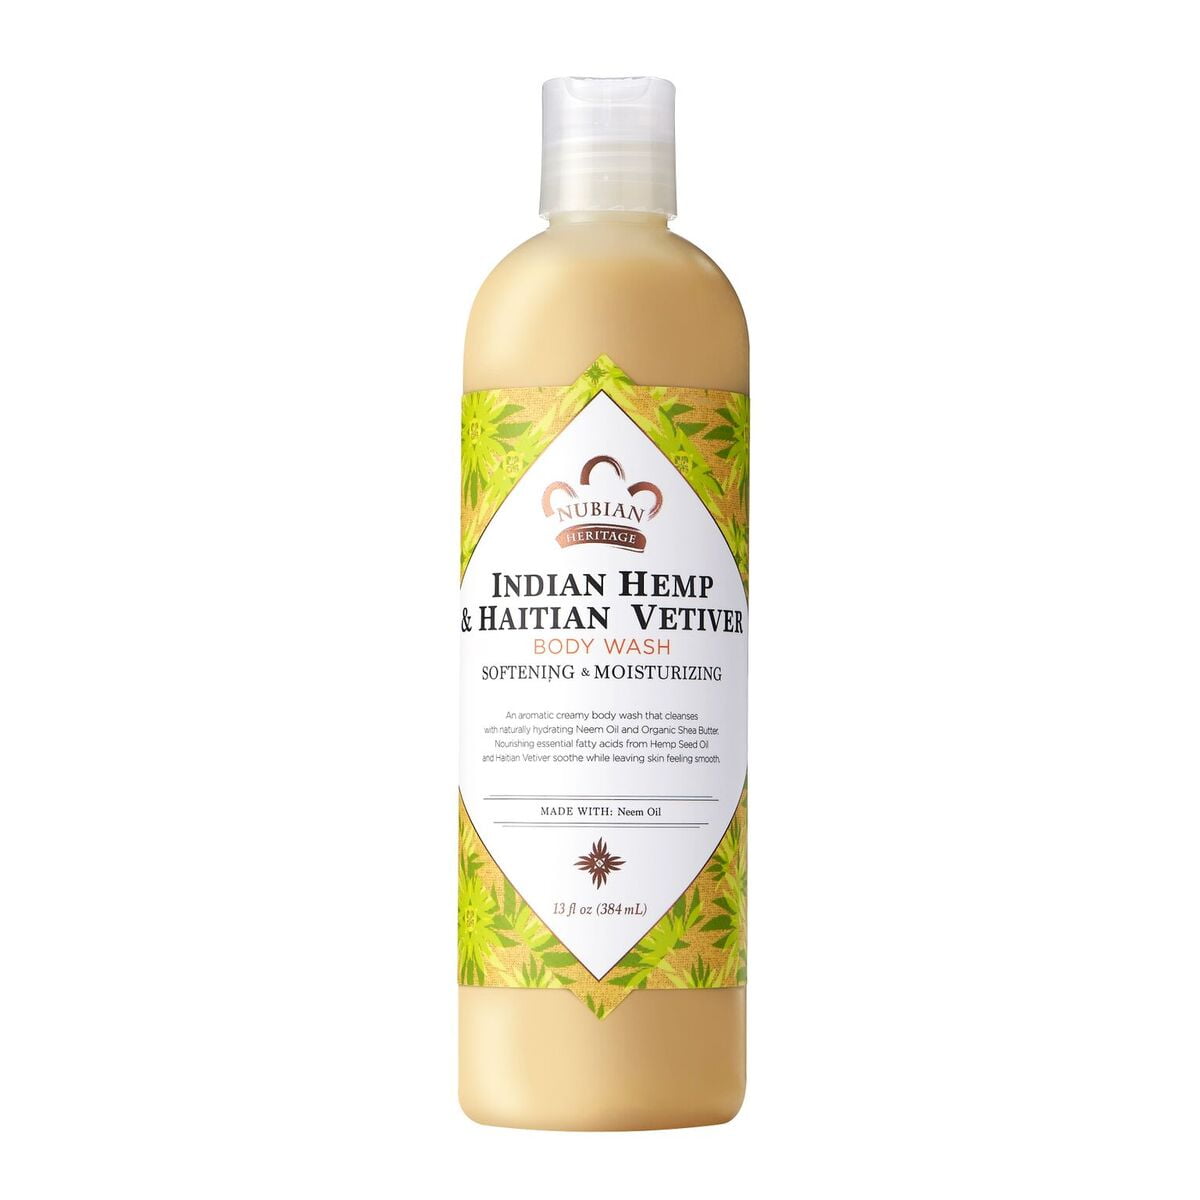 2 Bottles Pure & Natural ~ Original Goat Milk Moisturizing Body Wash 27 fl  oz Ea